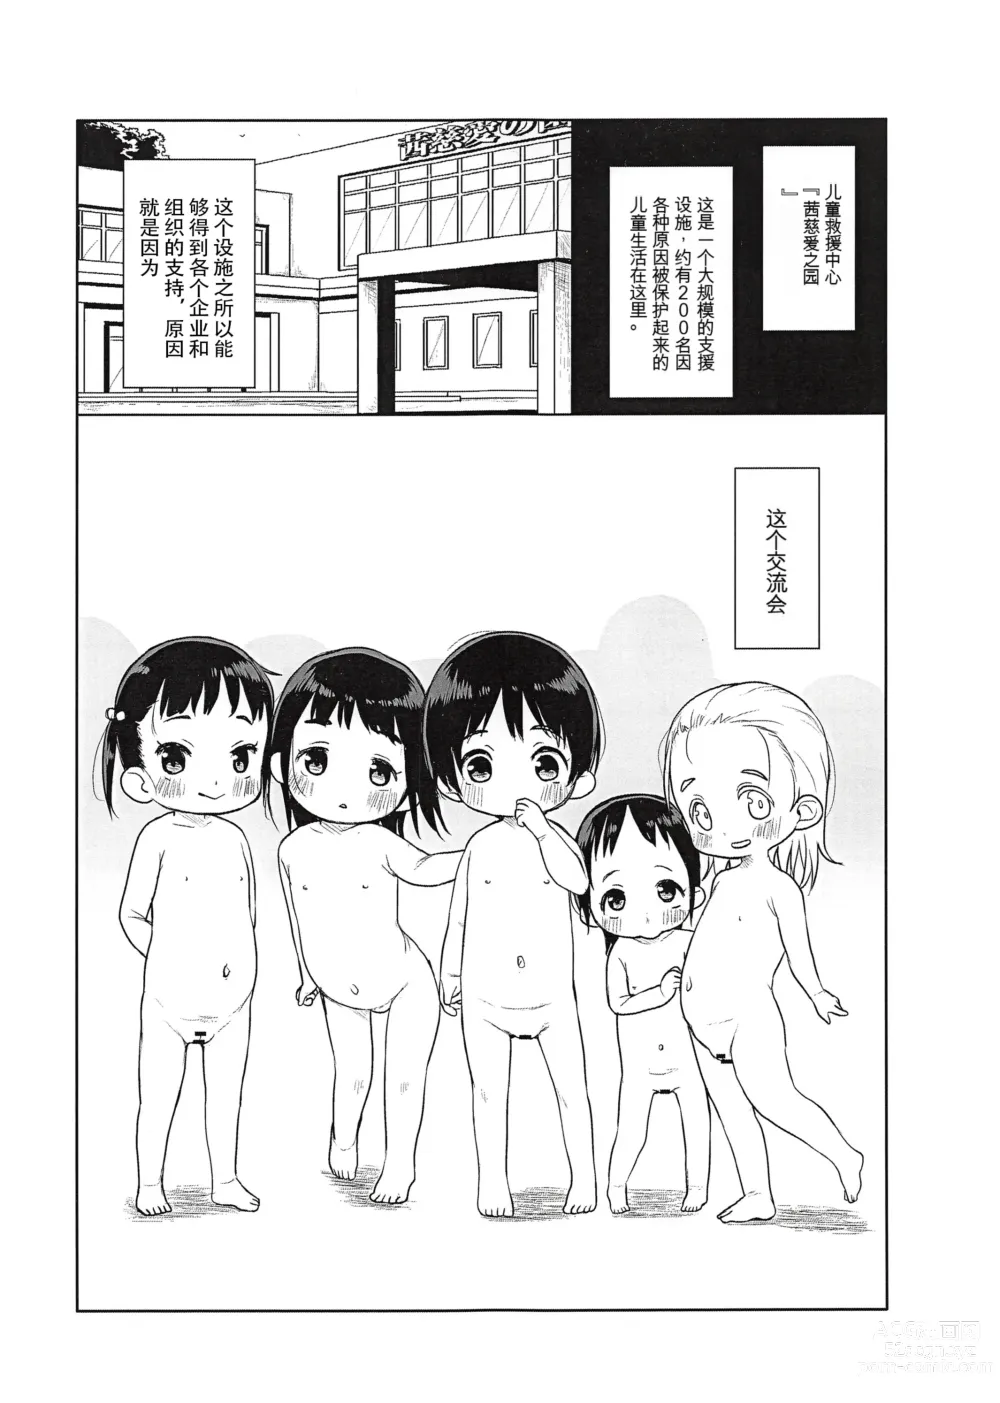 Page 4 of doujinshi Yousei no Sono -ag-